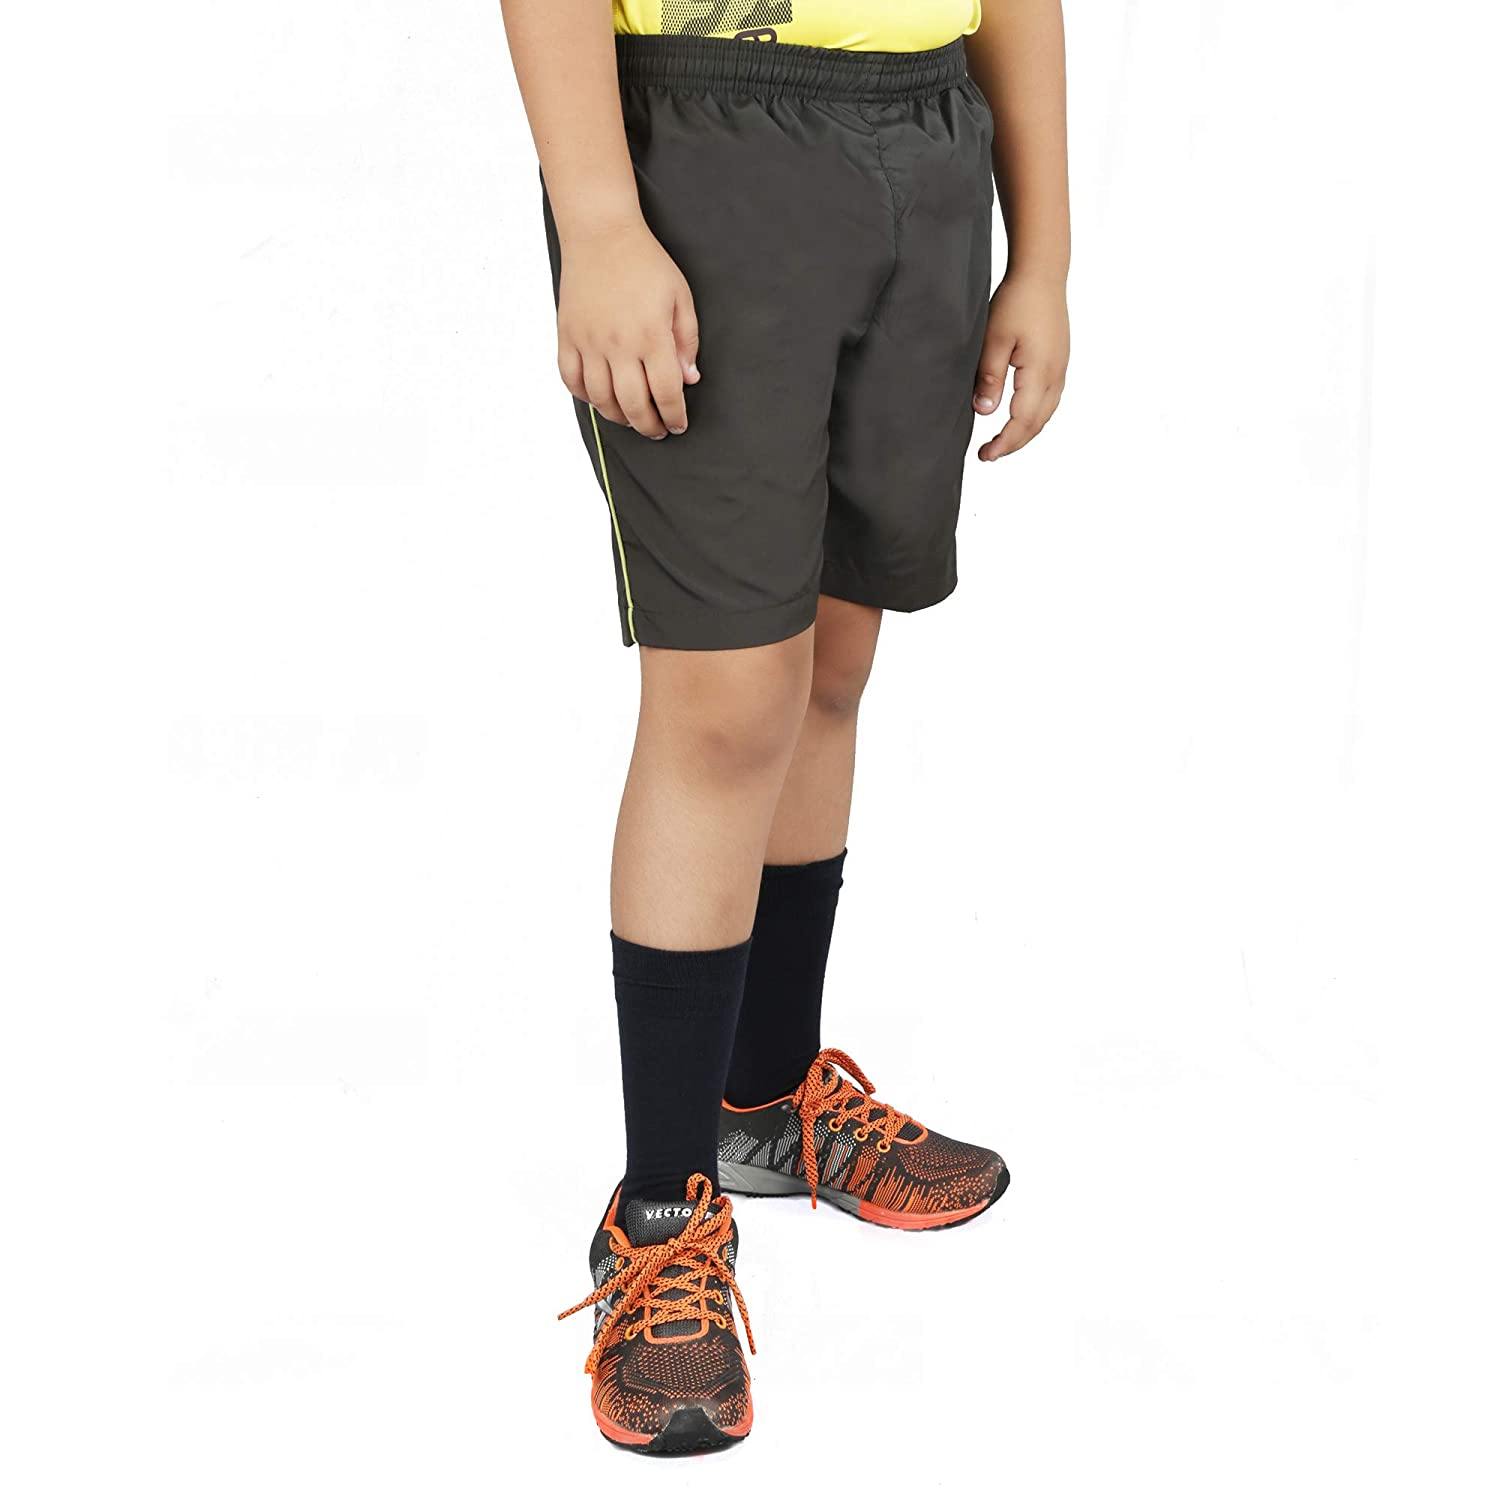 Vector X Polyester Kids Shorts Charcoal - Best Price online Prokicksports.com